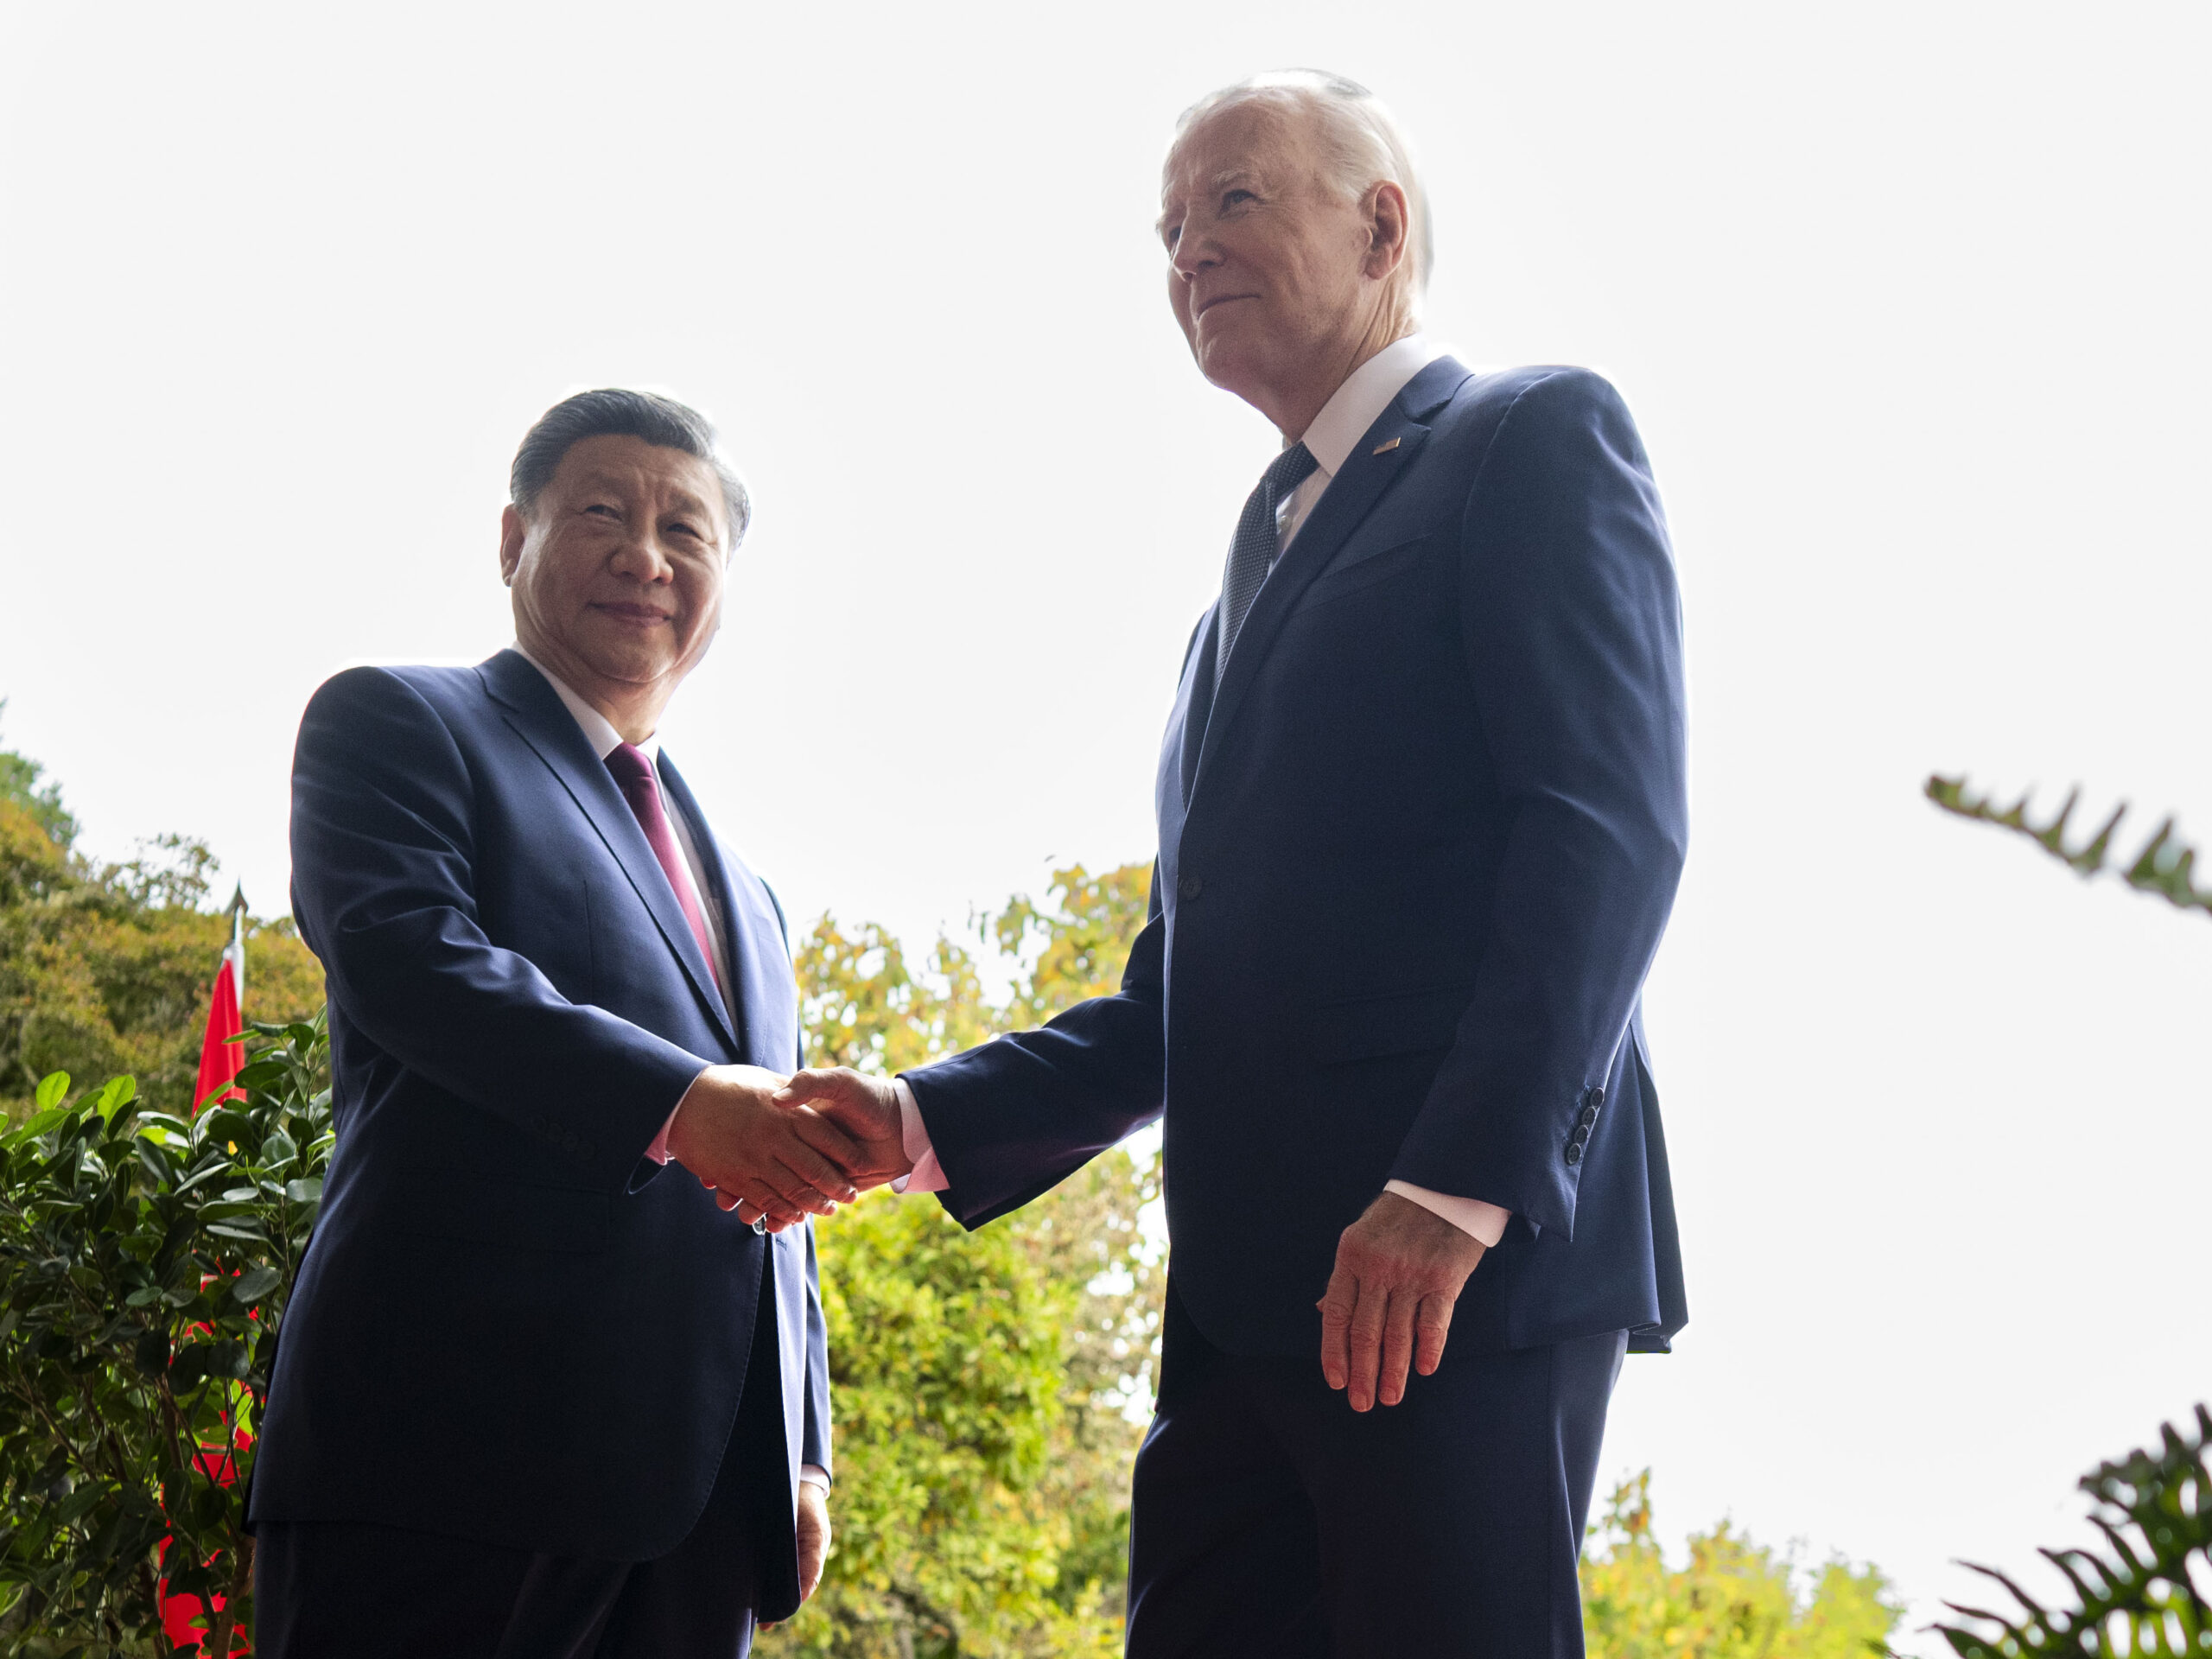 Xi Jinping and President Biden